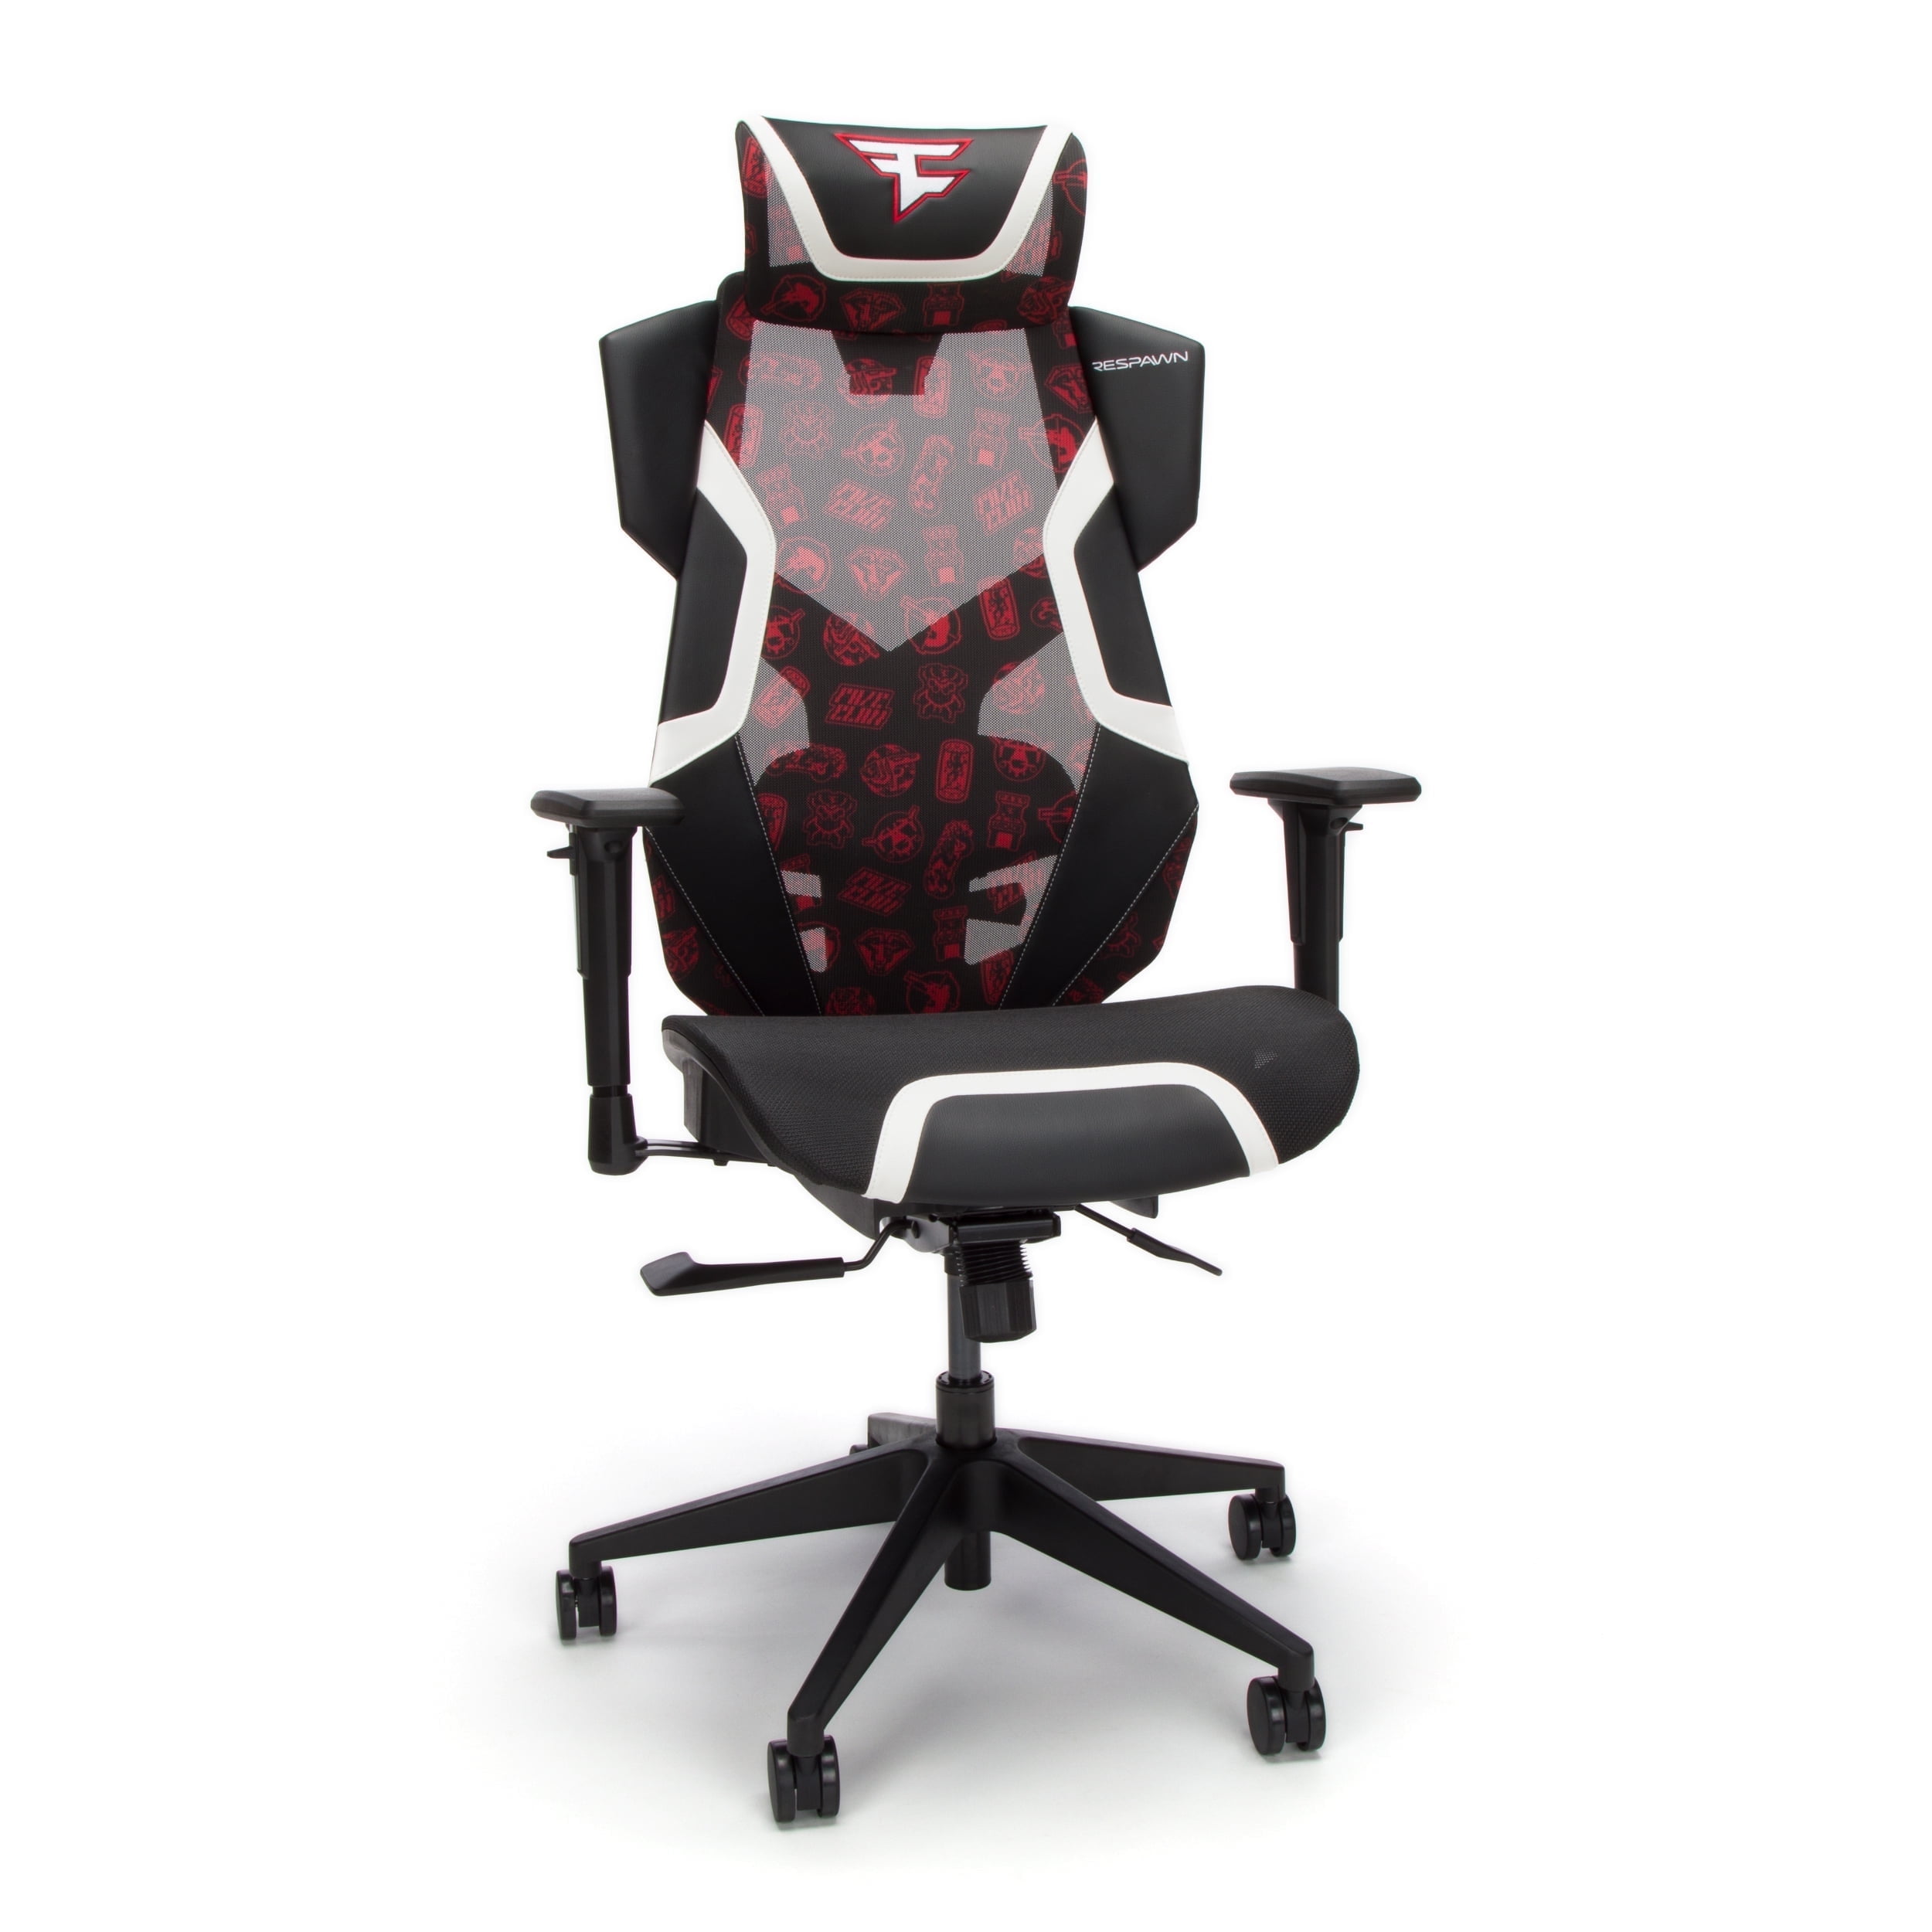 RESPAWN FLEXX Mesh Gaming Chair With Lumbar Support,Ergonomic